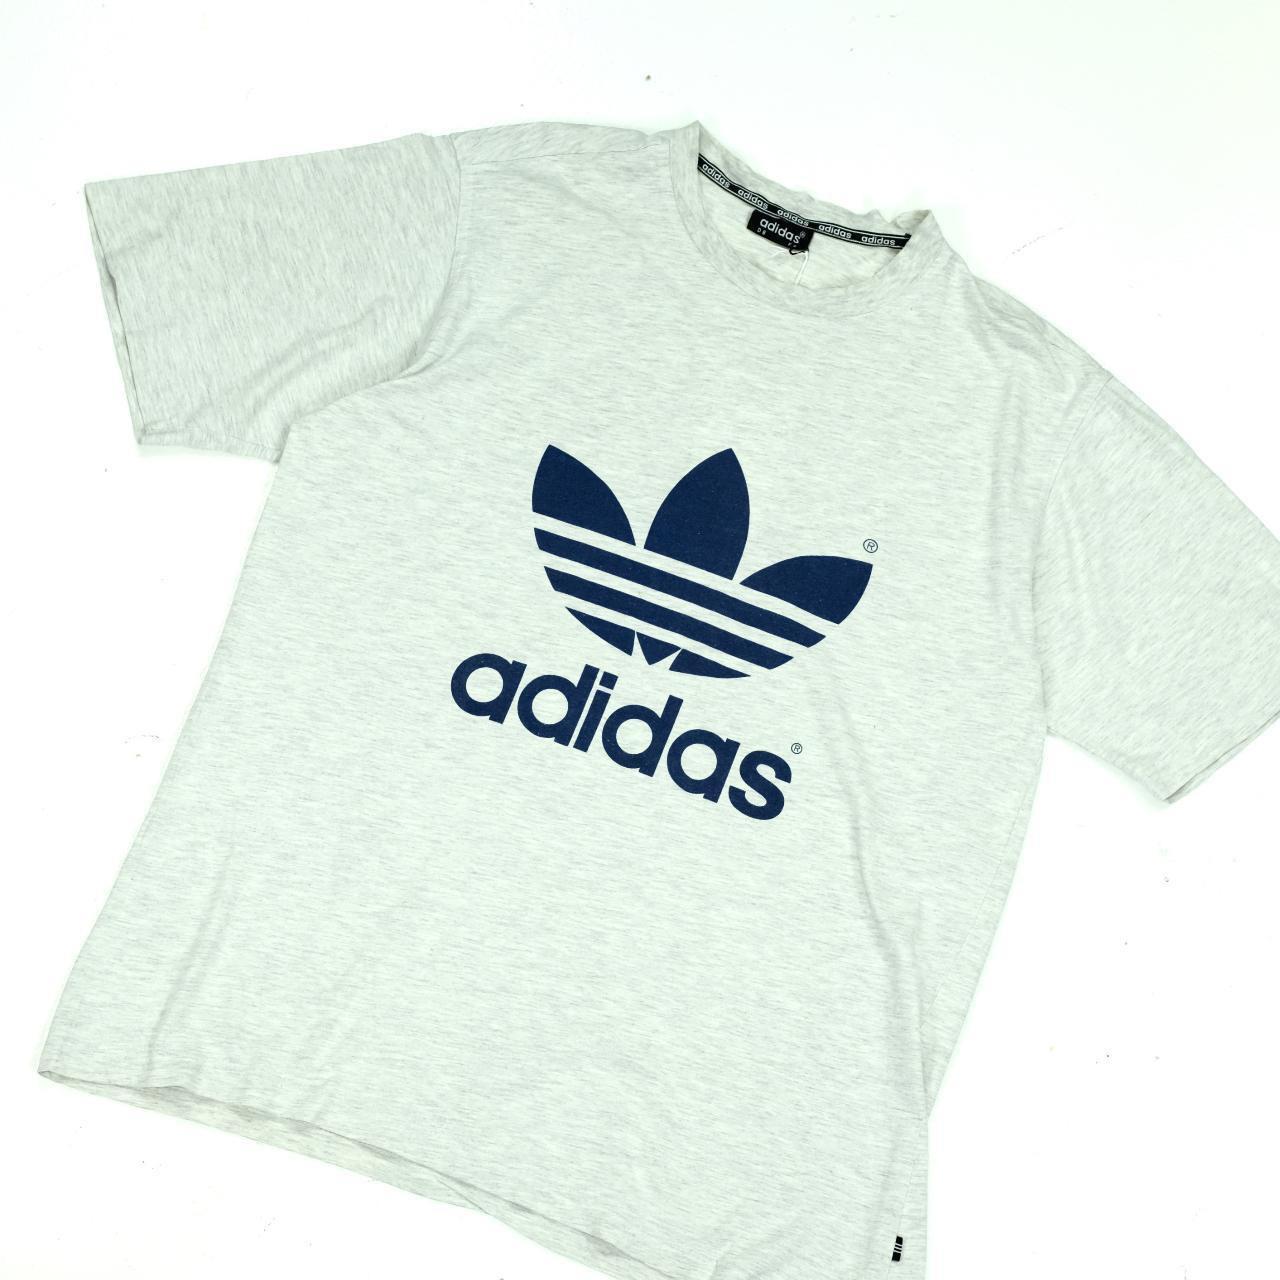 Adidas T-shirt